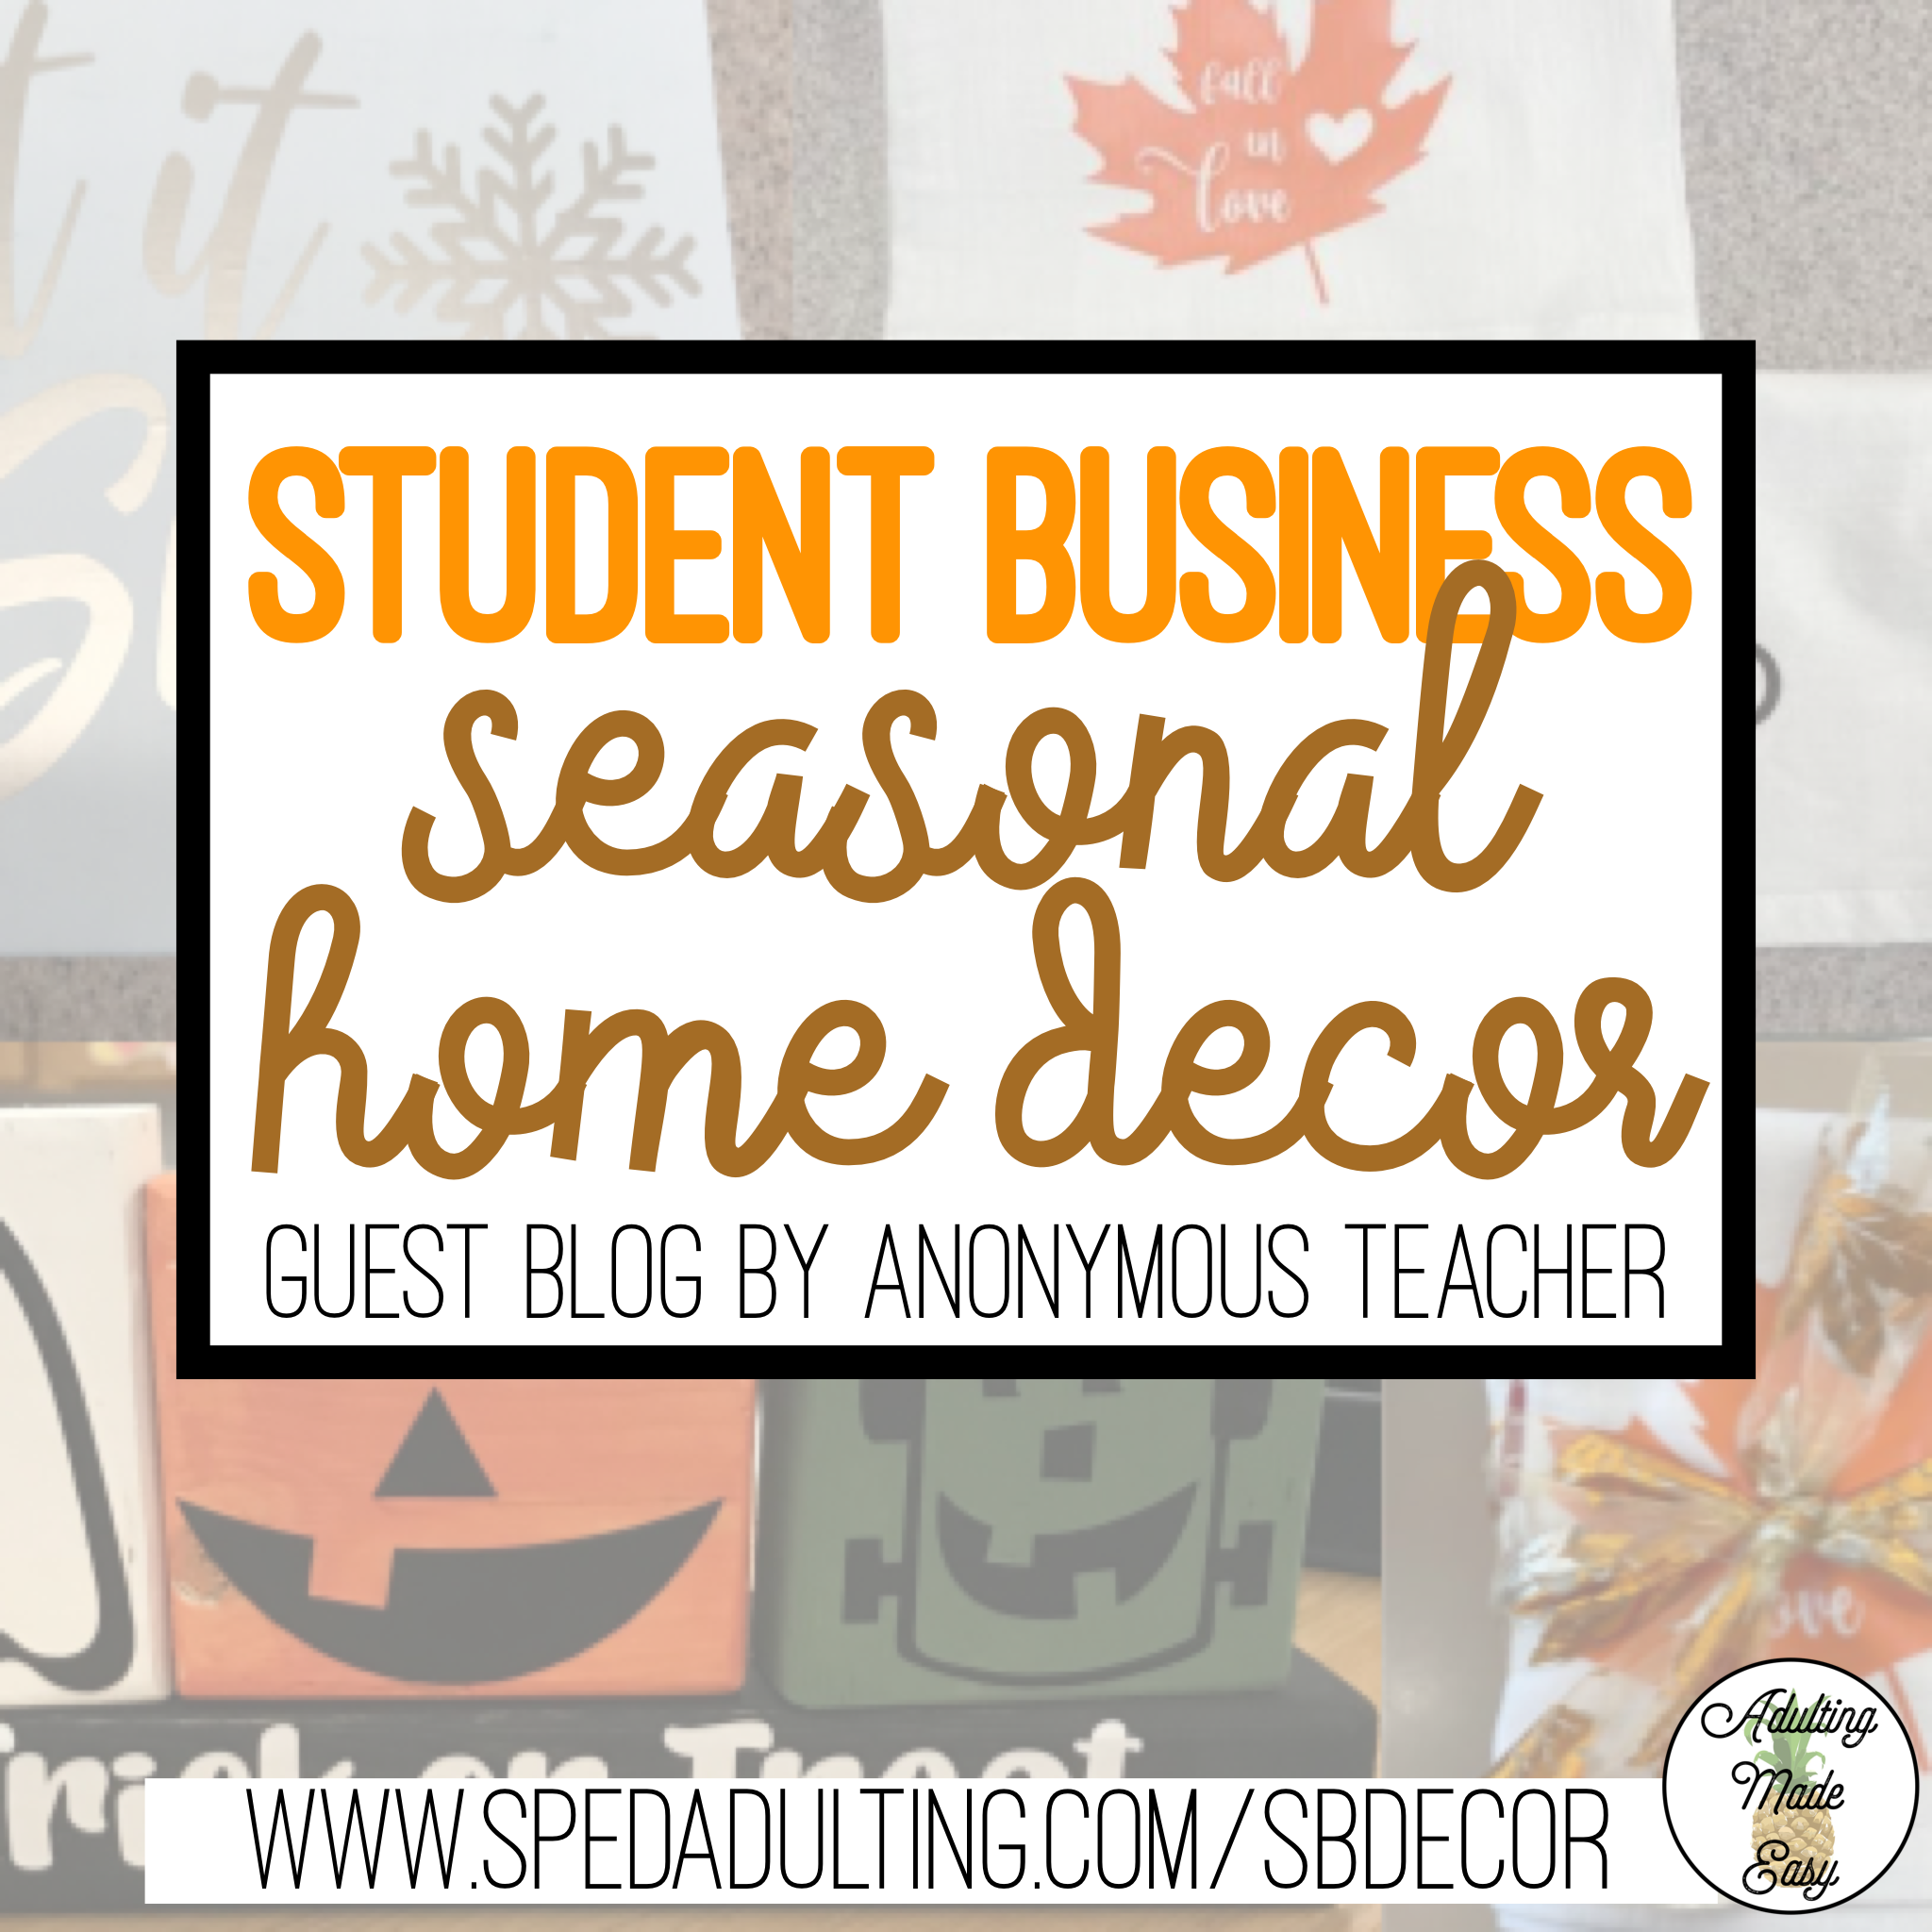 BLOG: Classroom Student Business for special education: Seasonal Home Decor